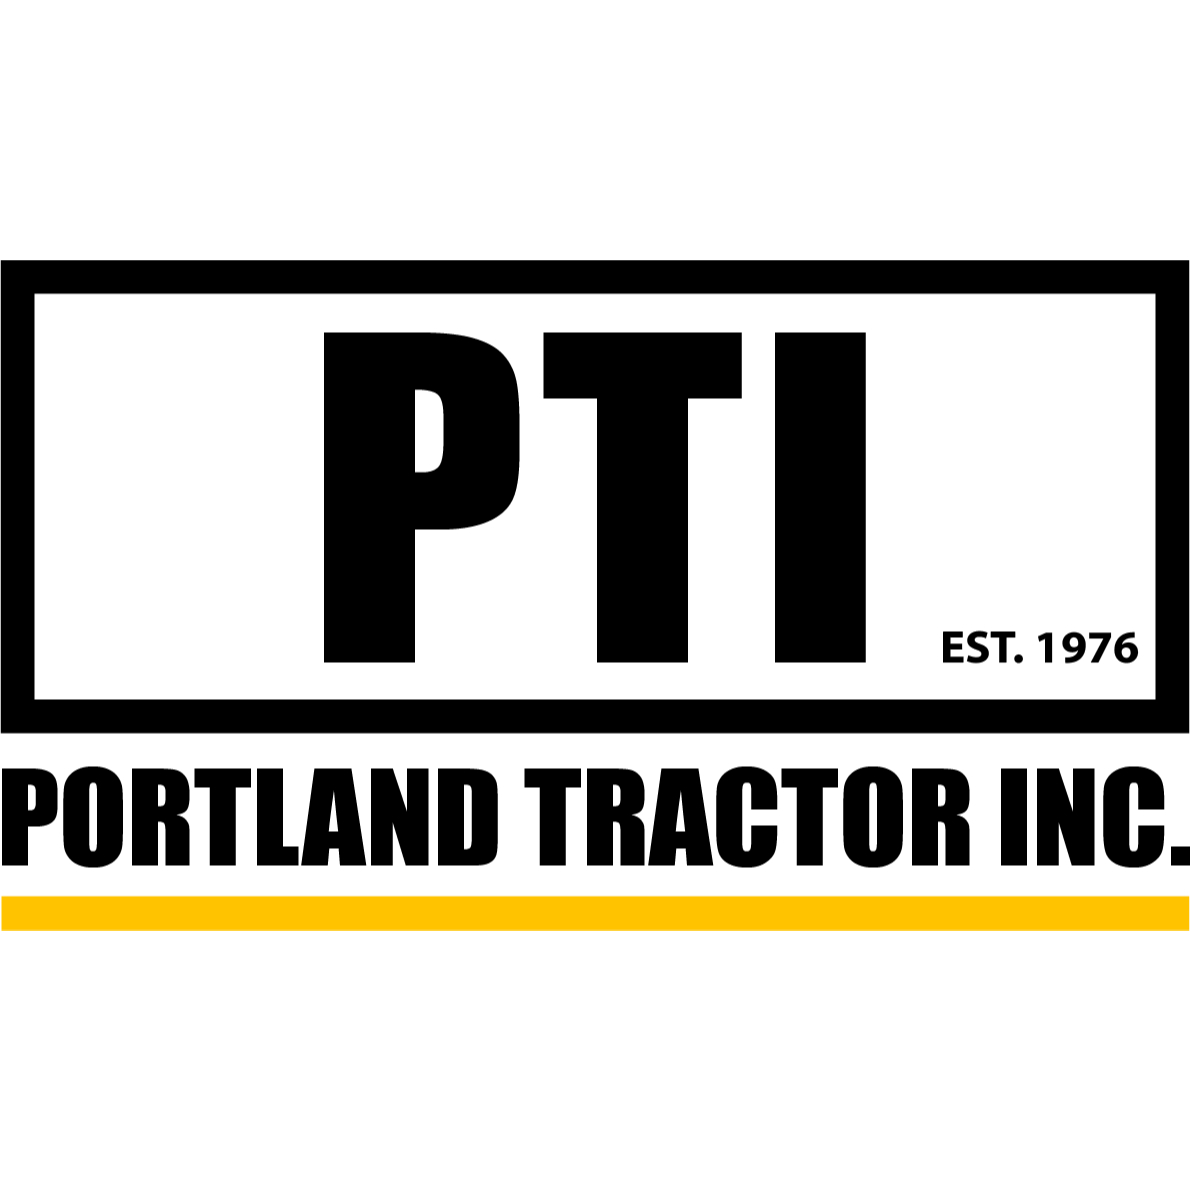 Portland Tractor, Inc. - PTI - Construction Materials & Building Supplies